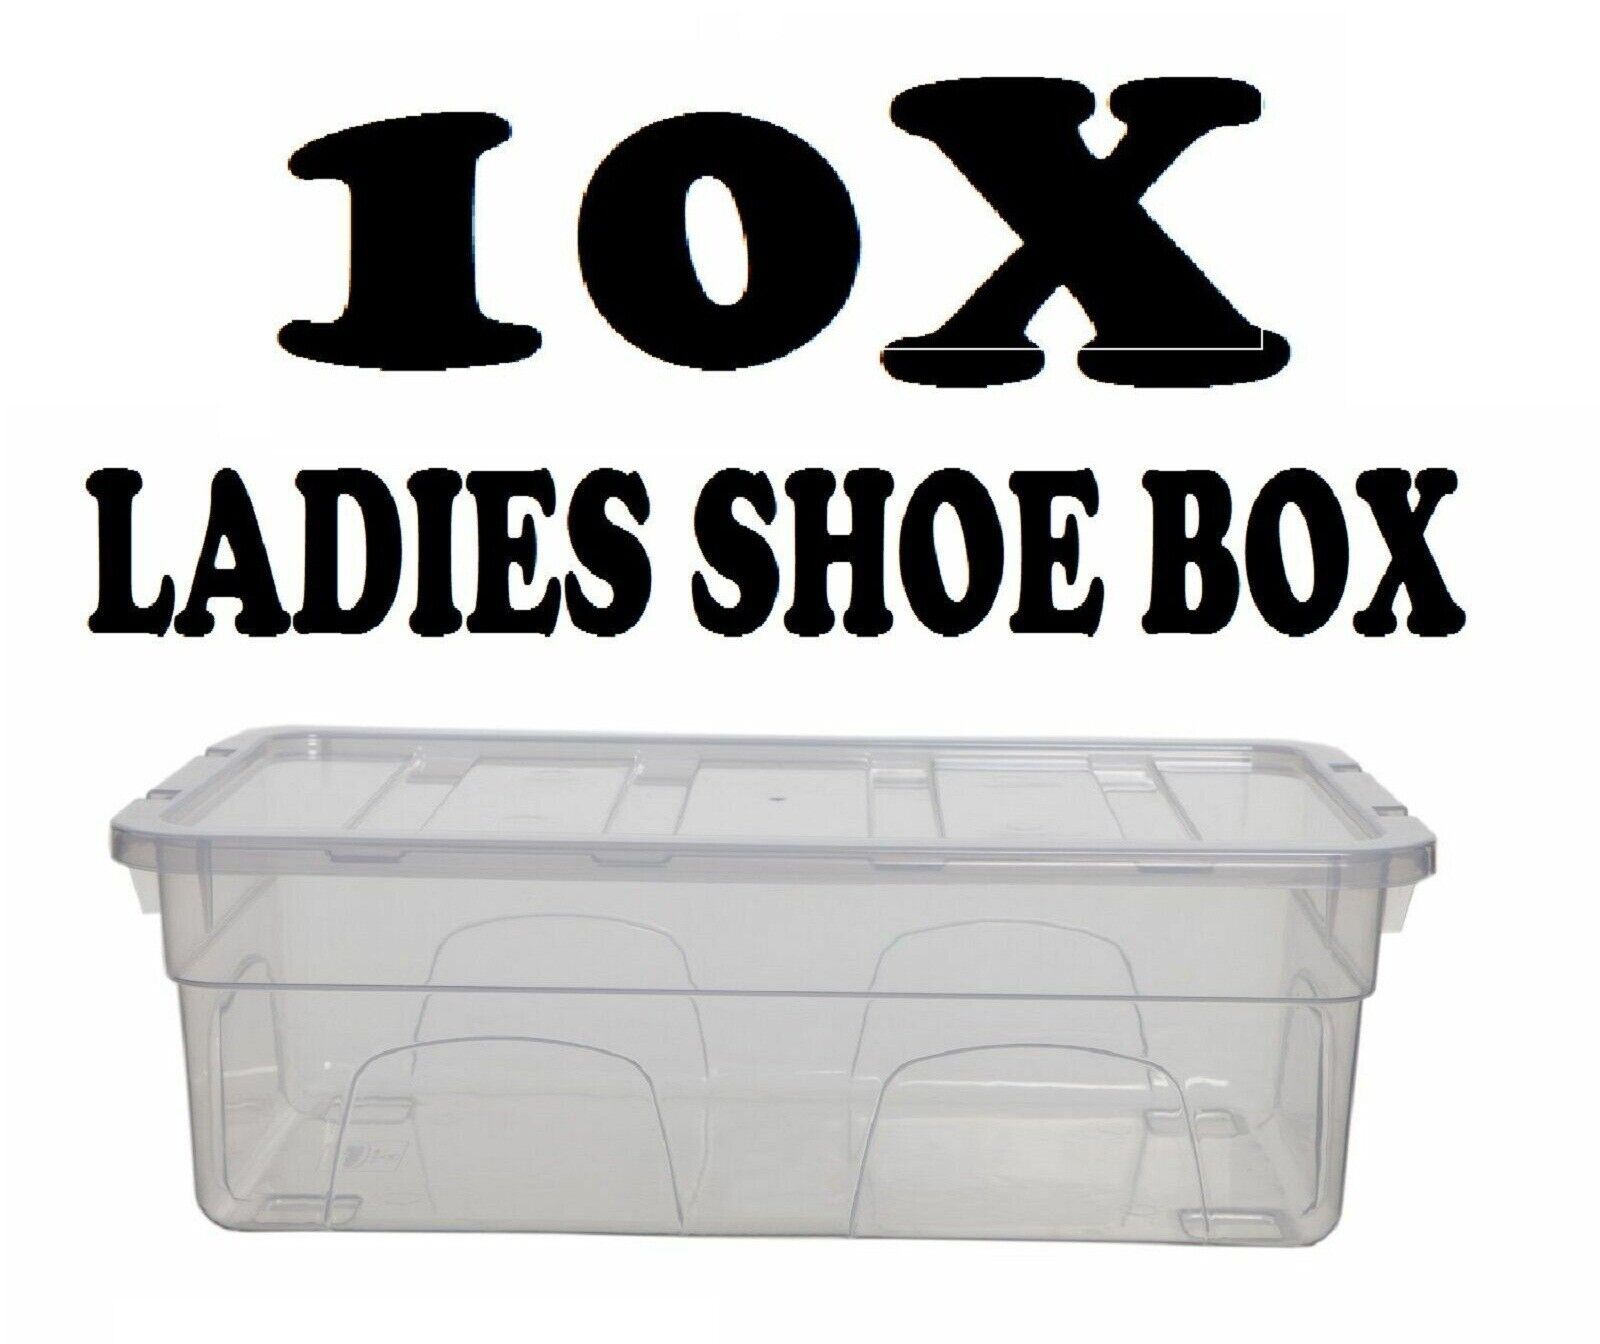 10x Tucson Mall Ladies Shoe Box Plastic wholesale Storage Clear Transpa Stacking Boxes